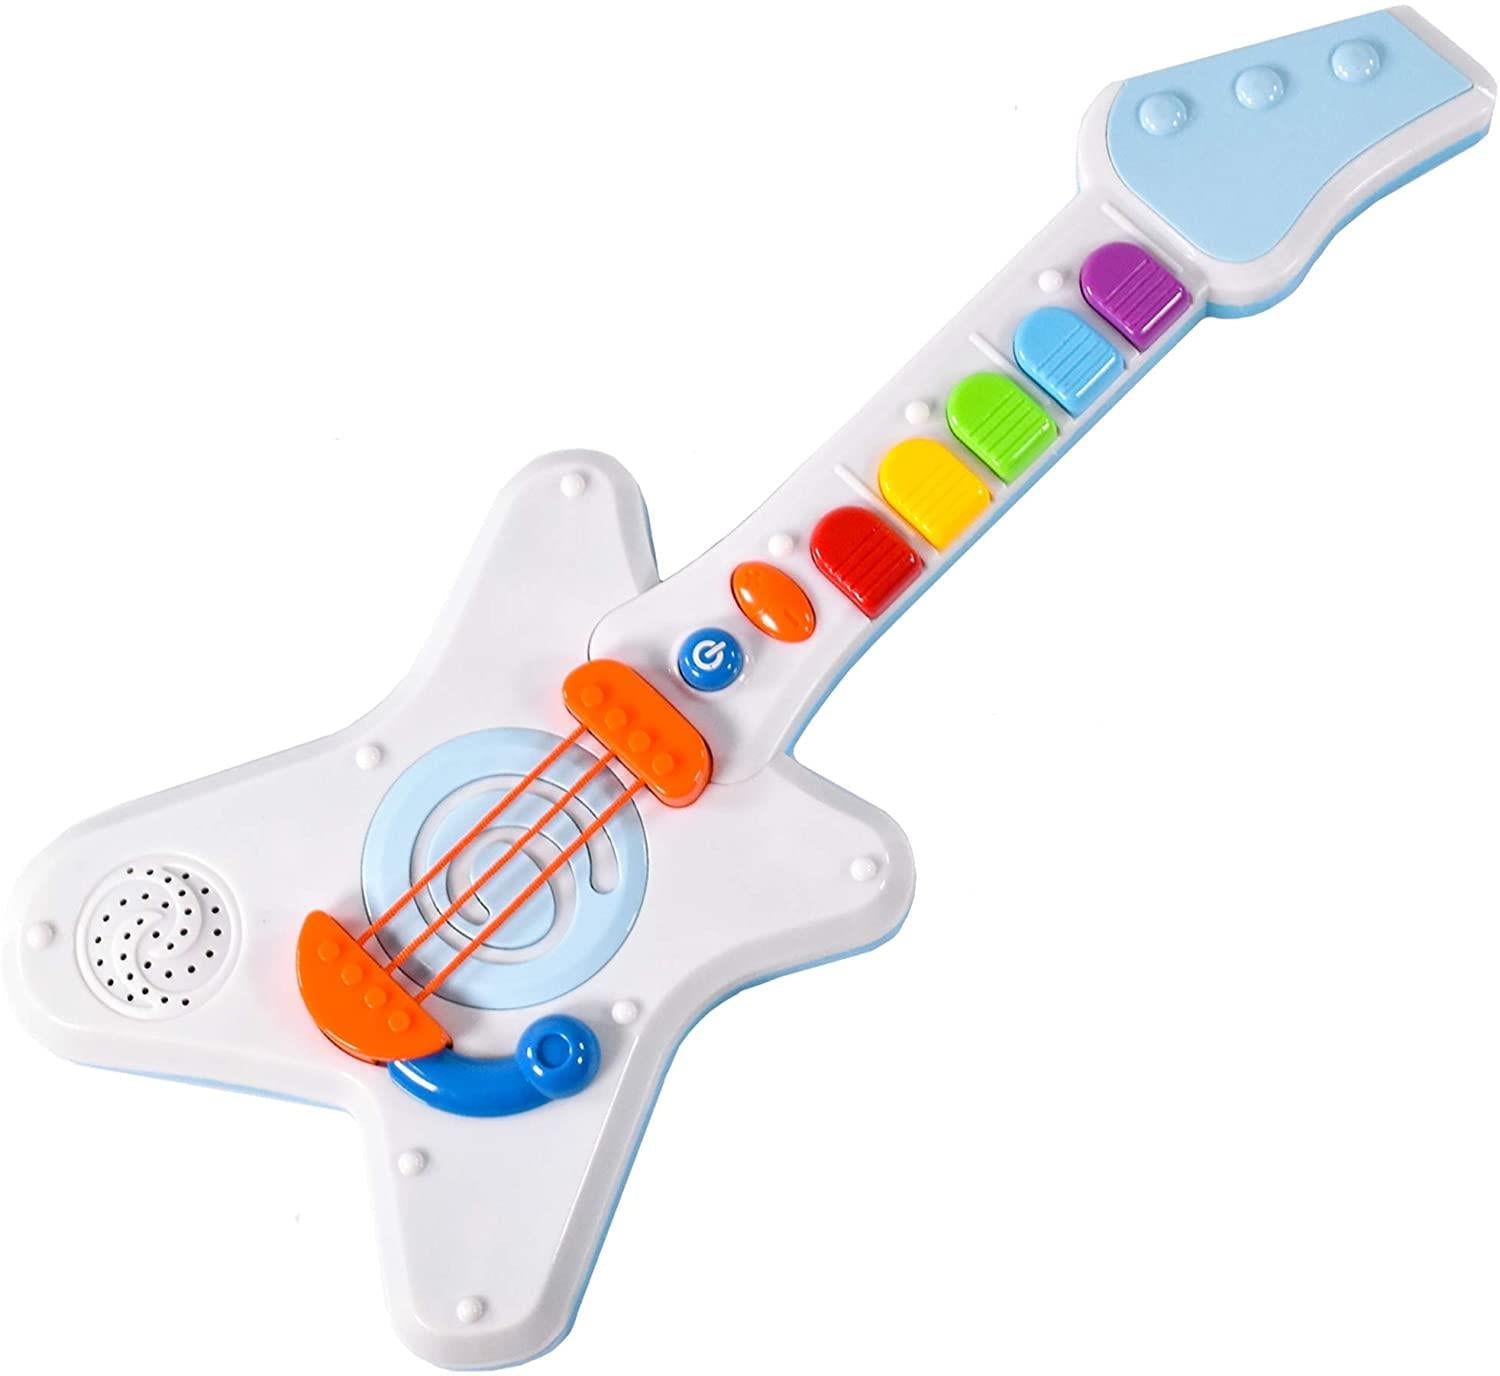 The Magic Toy Shop Kids Guitar Toy Rock N Roll Light Up & Sounds Kids Guitar